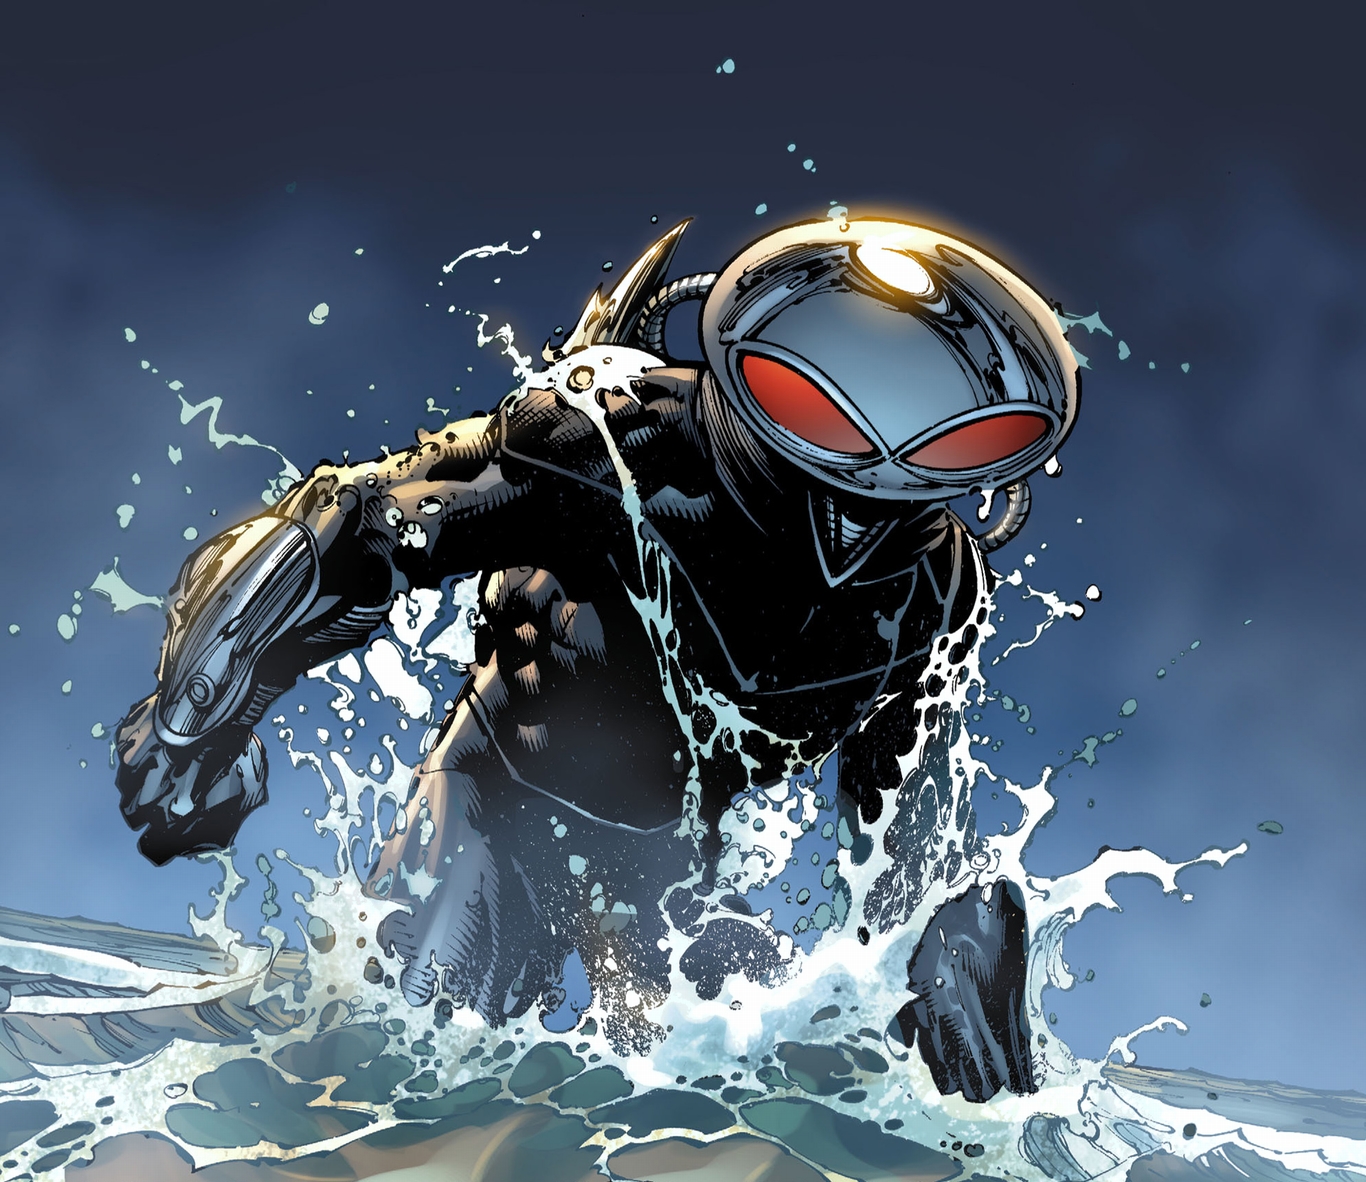 Report: Aquaman movie villain will be Black Manta